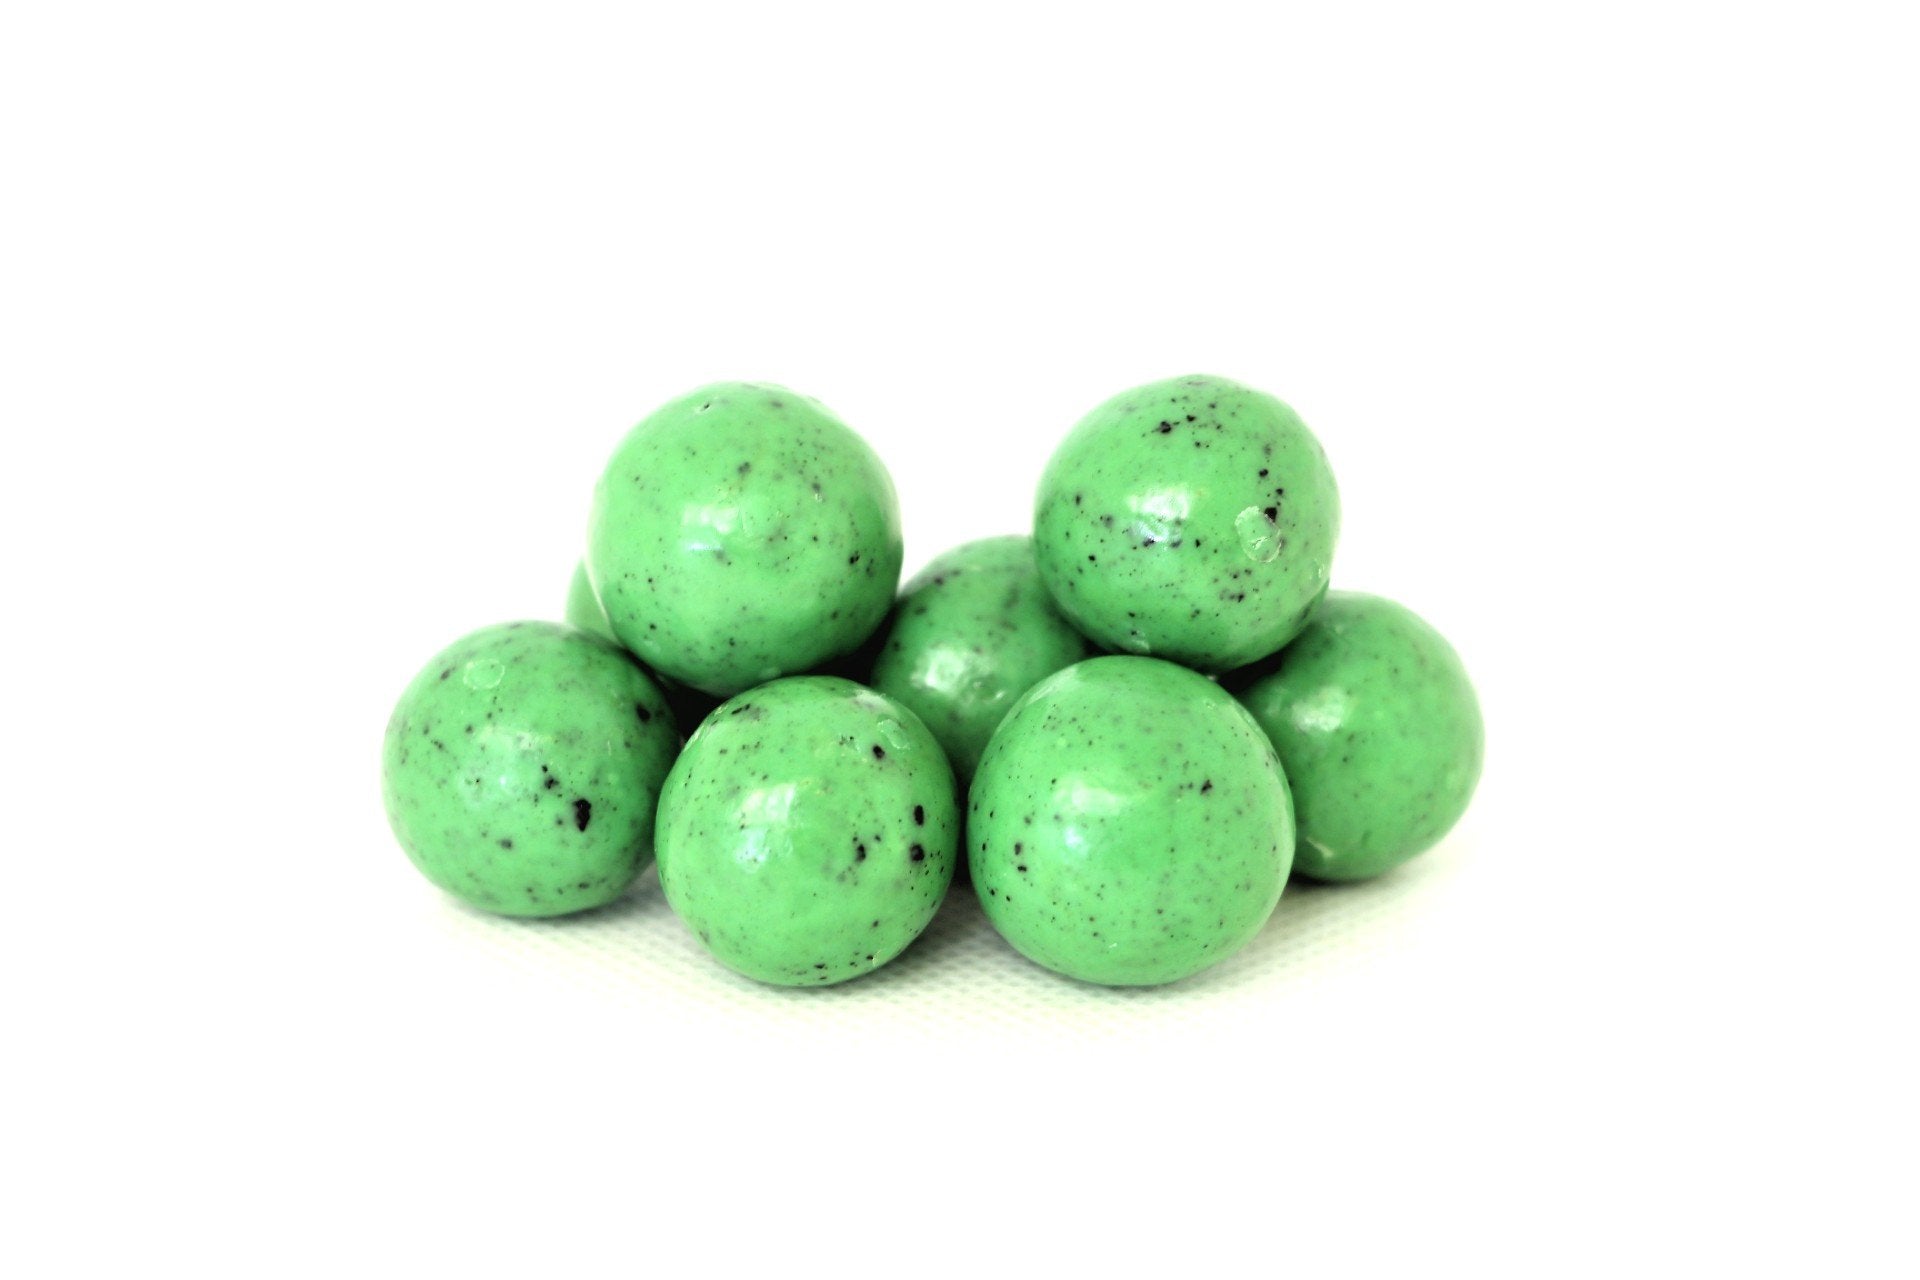 Mint Cookies Malted Milk Balls